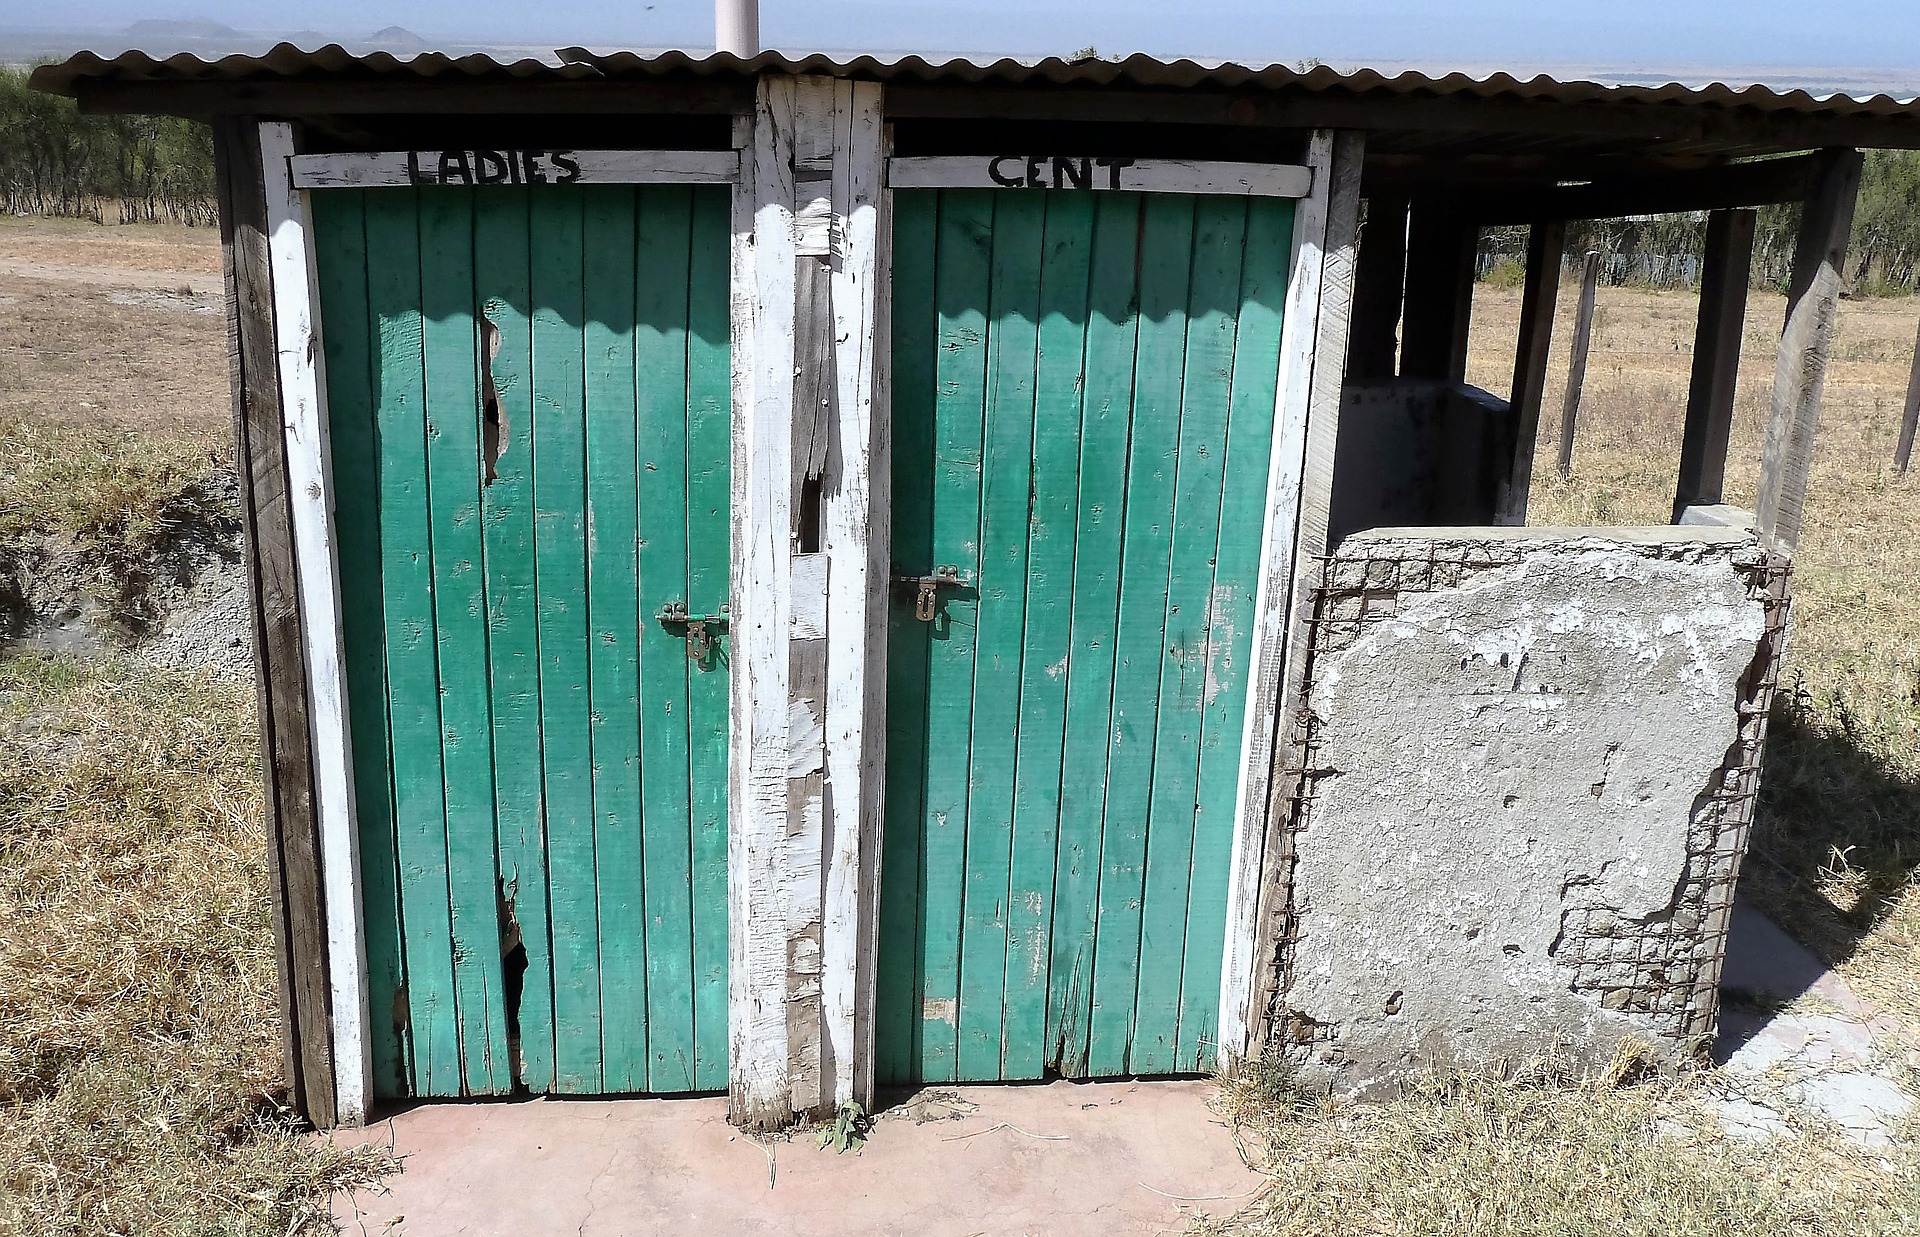 Ladies/Gents primitive toilets, Africa   